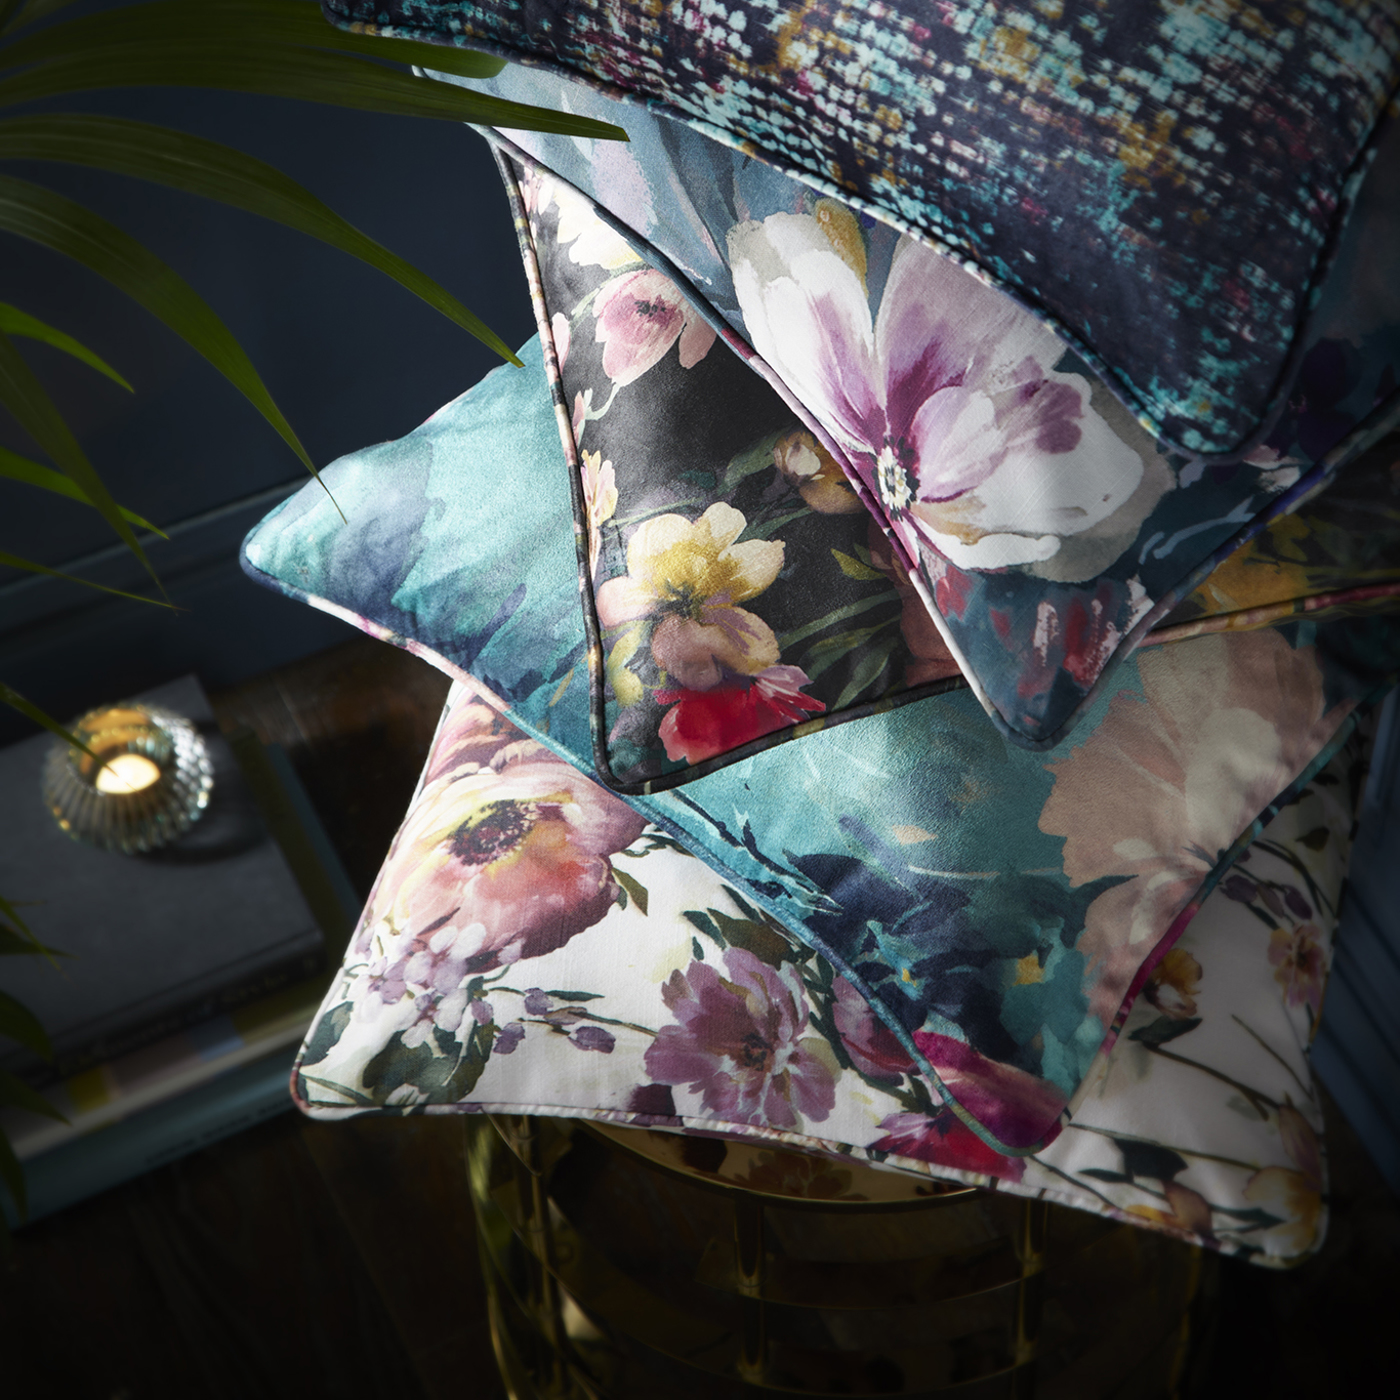 Bouquet Damson Cushions by STG